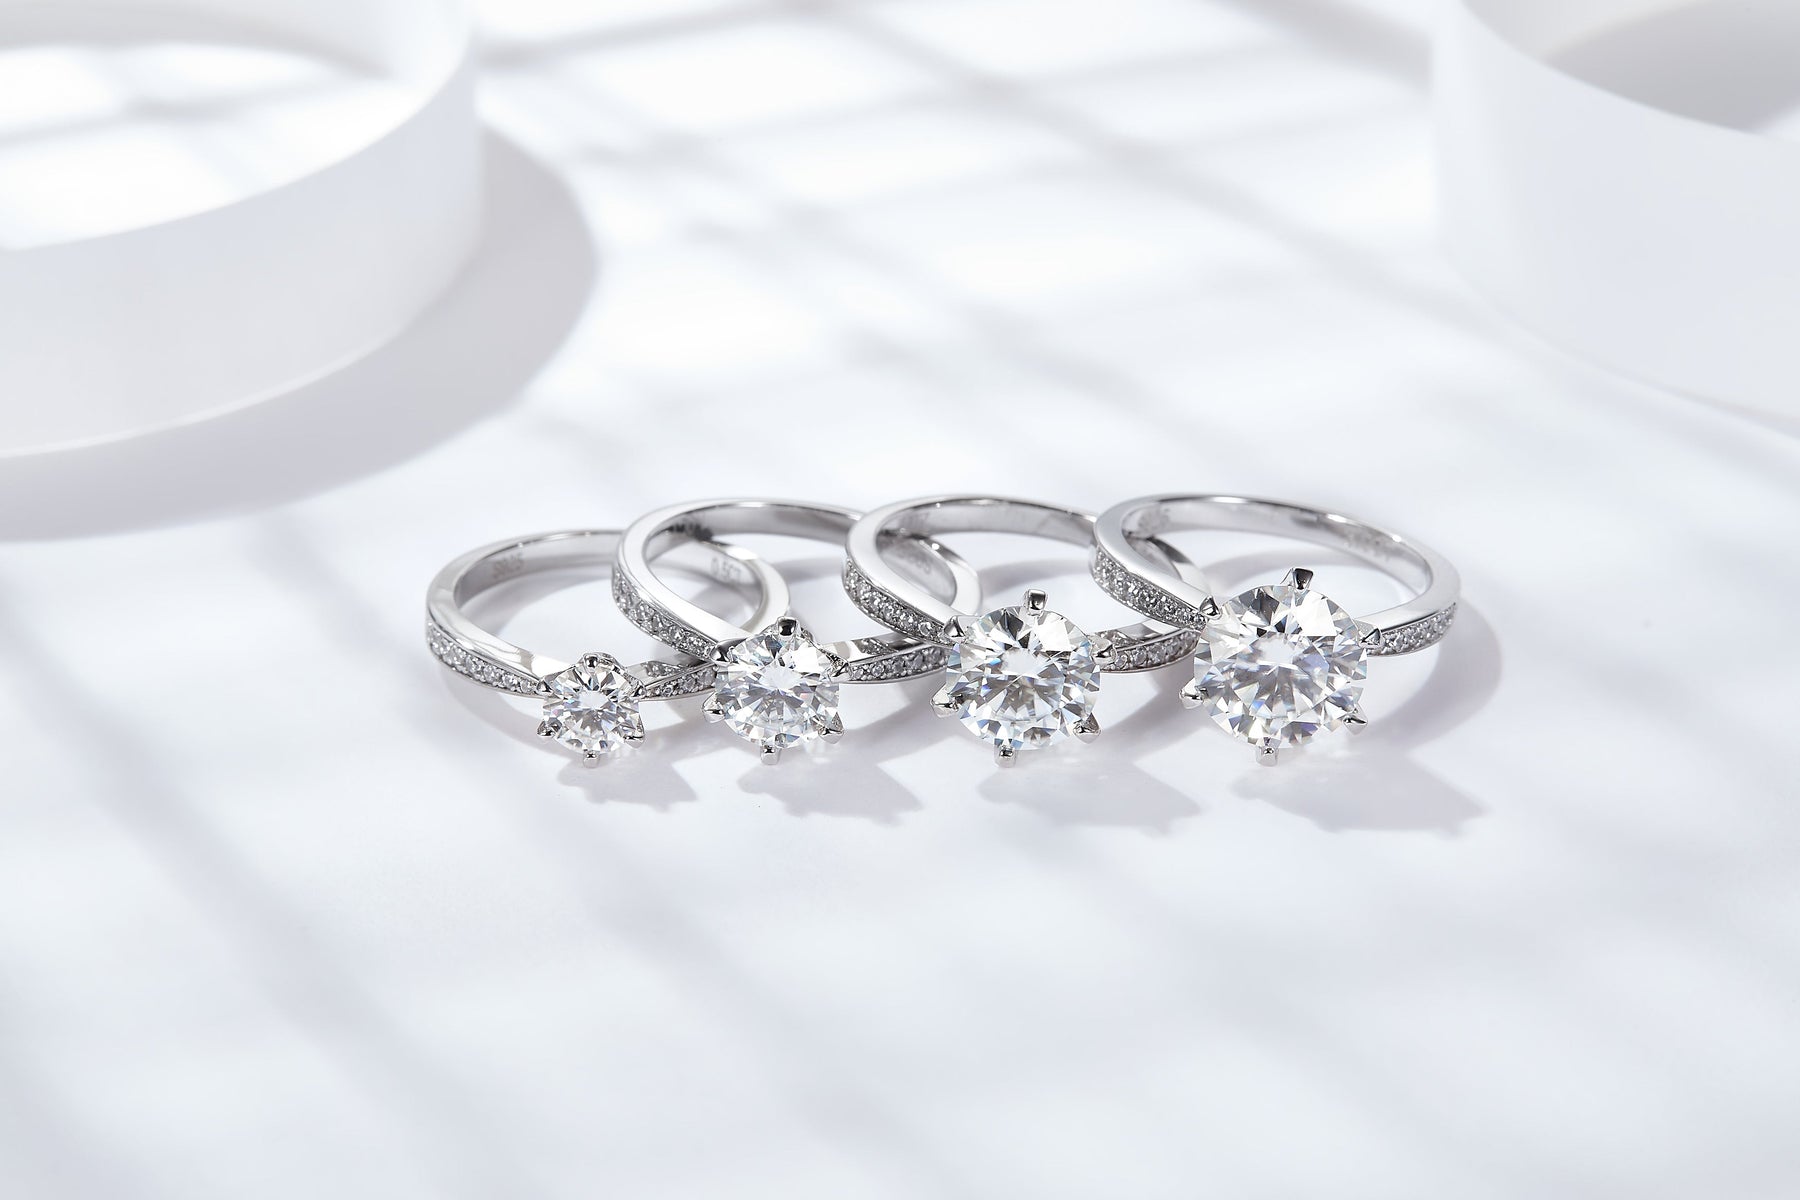 Six-prong S925 Silver Moissanite Diamond Ring